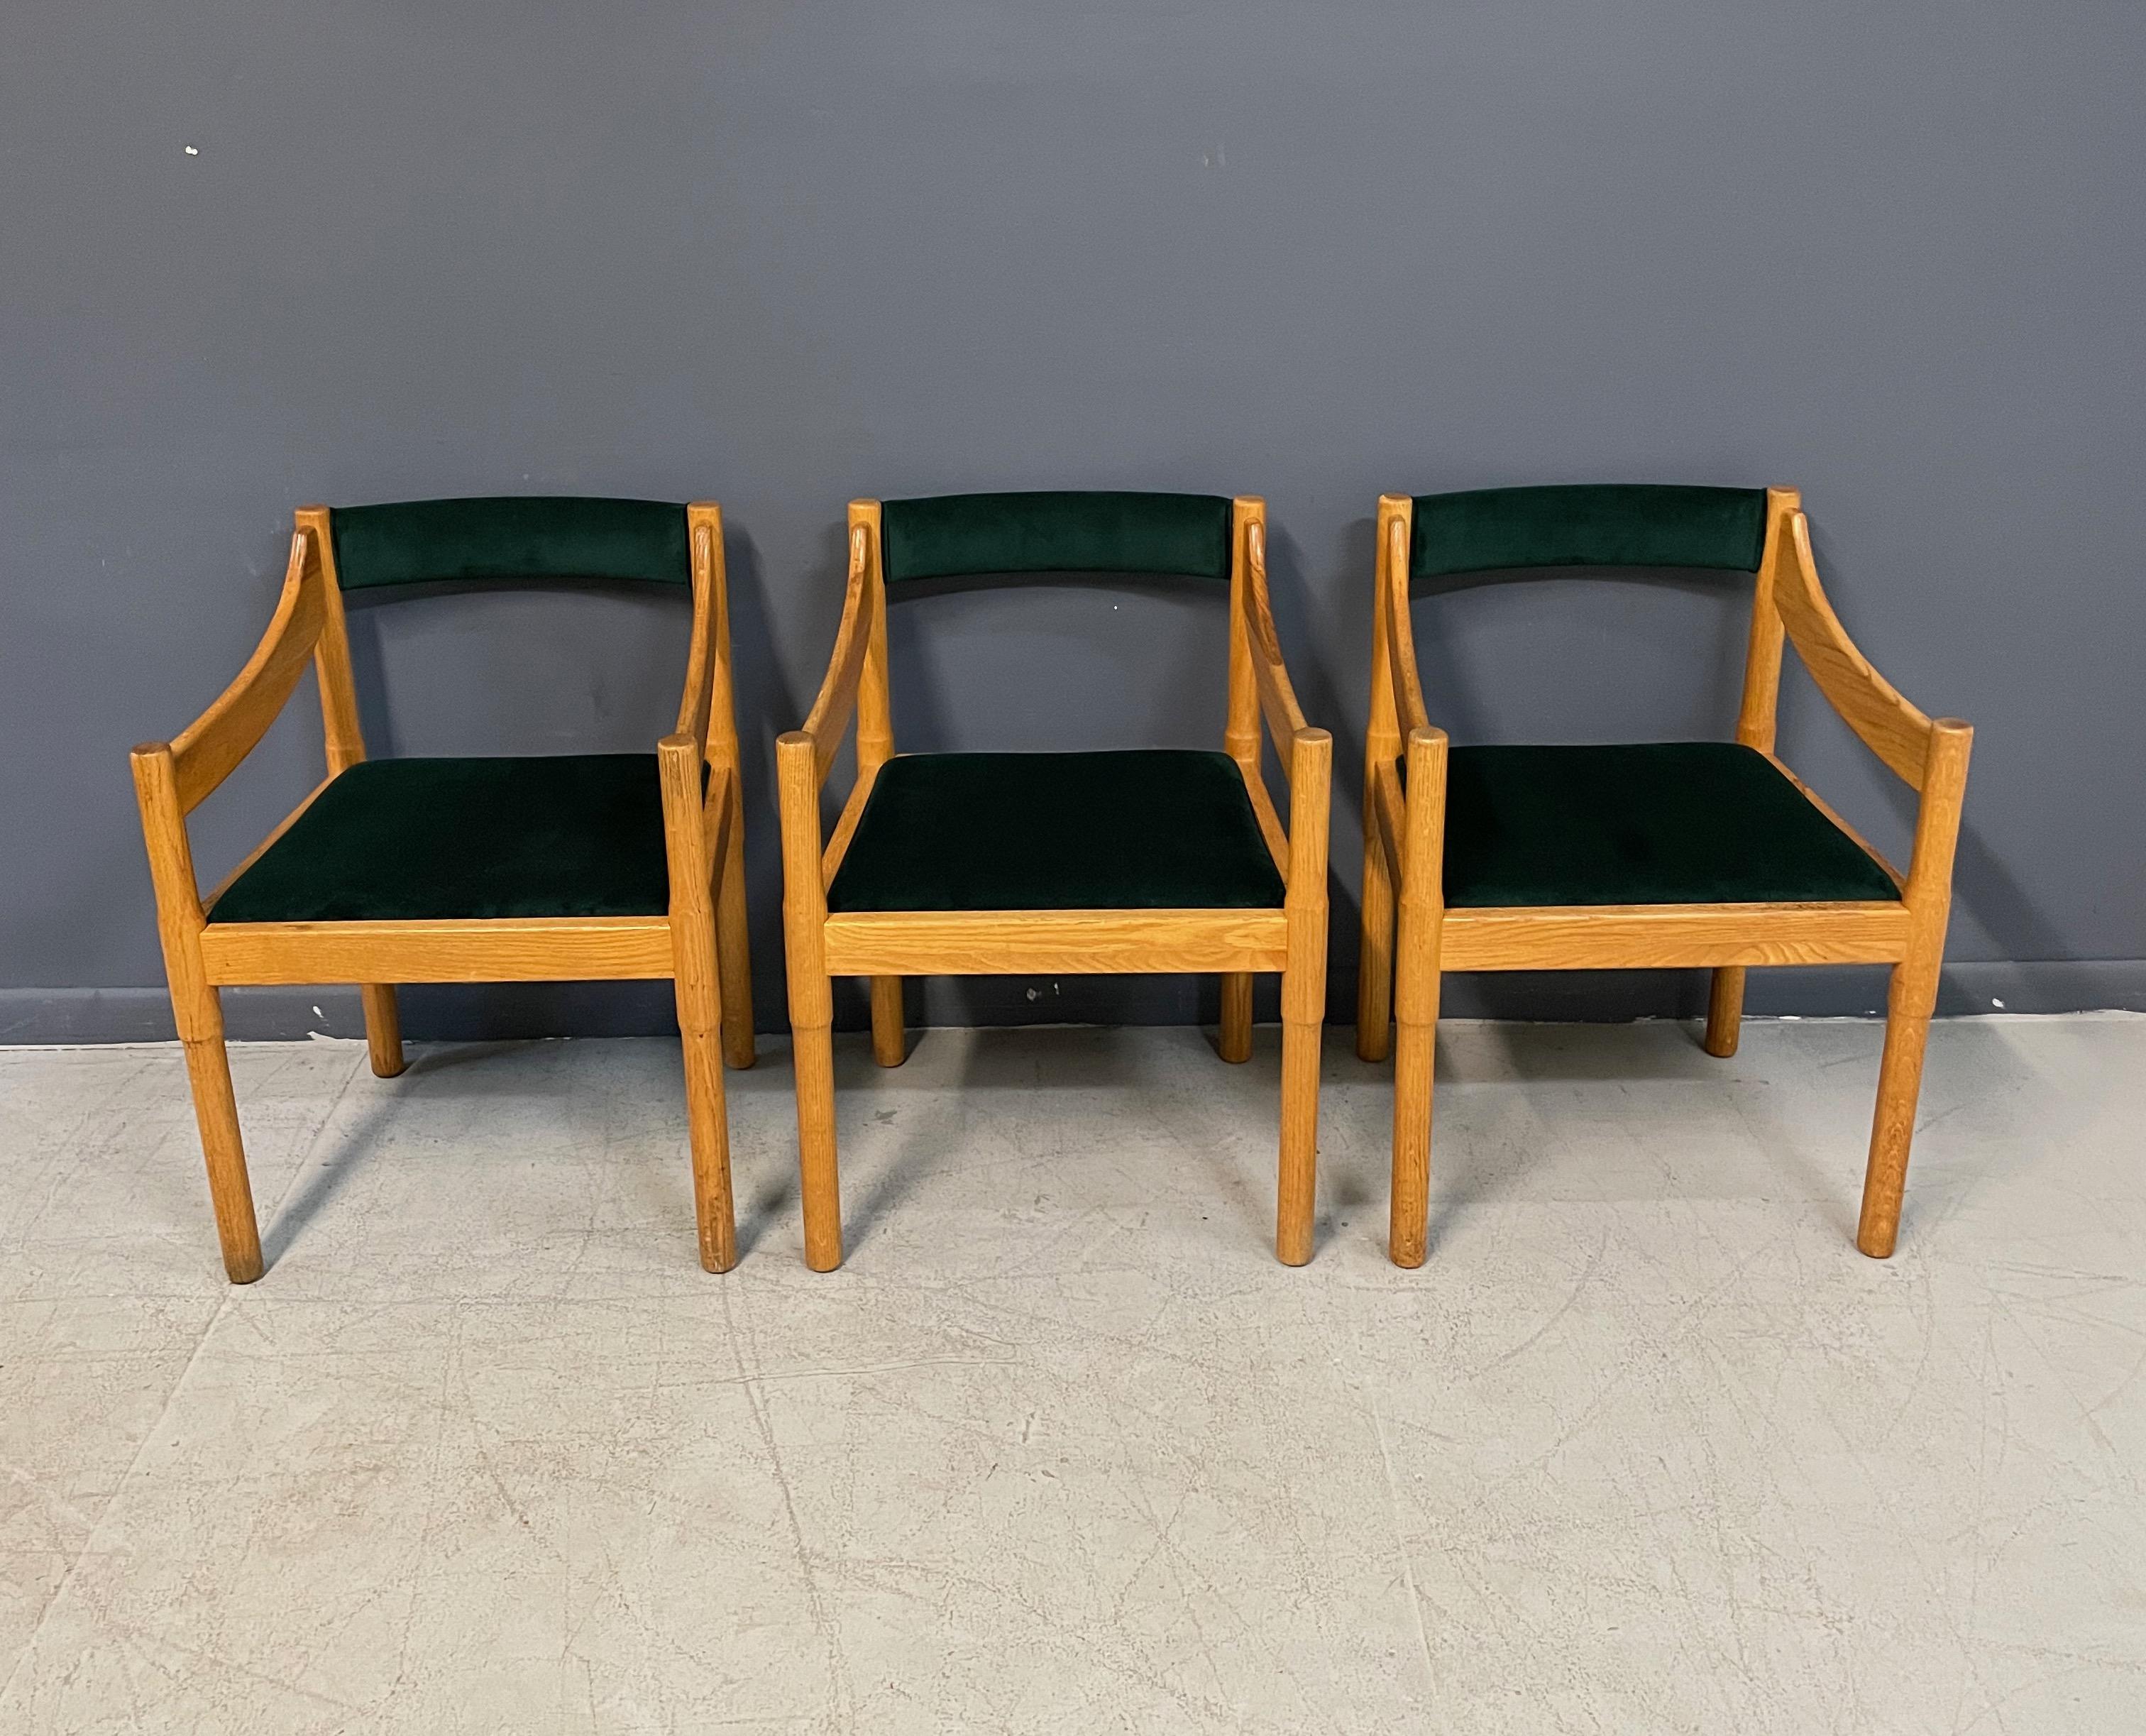 carimate chairs by vico magistretti